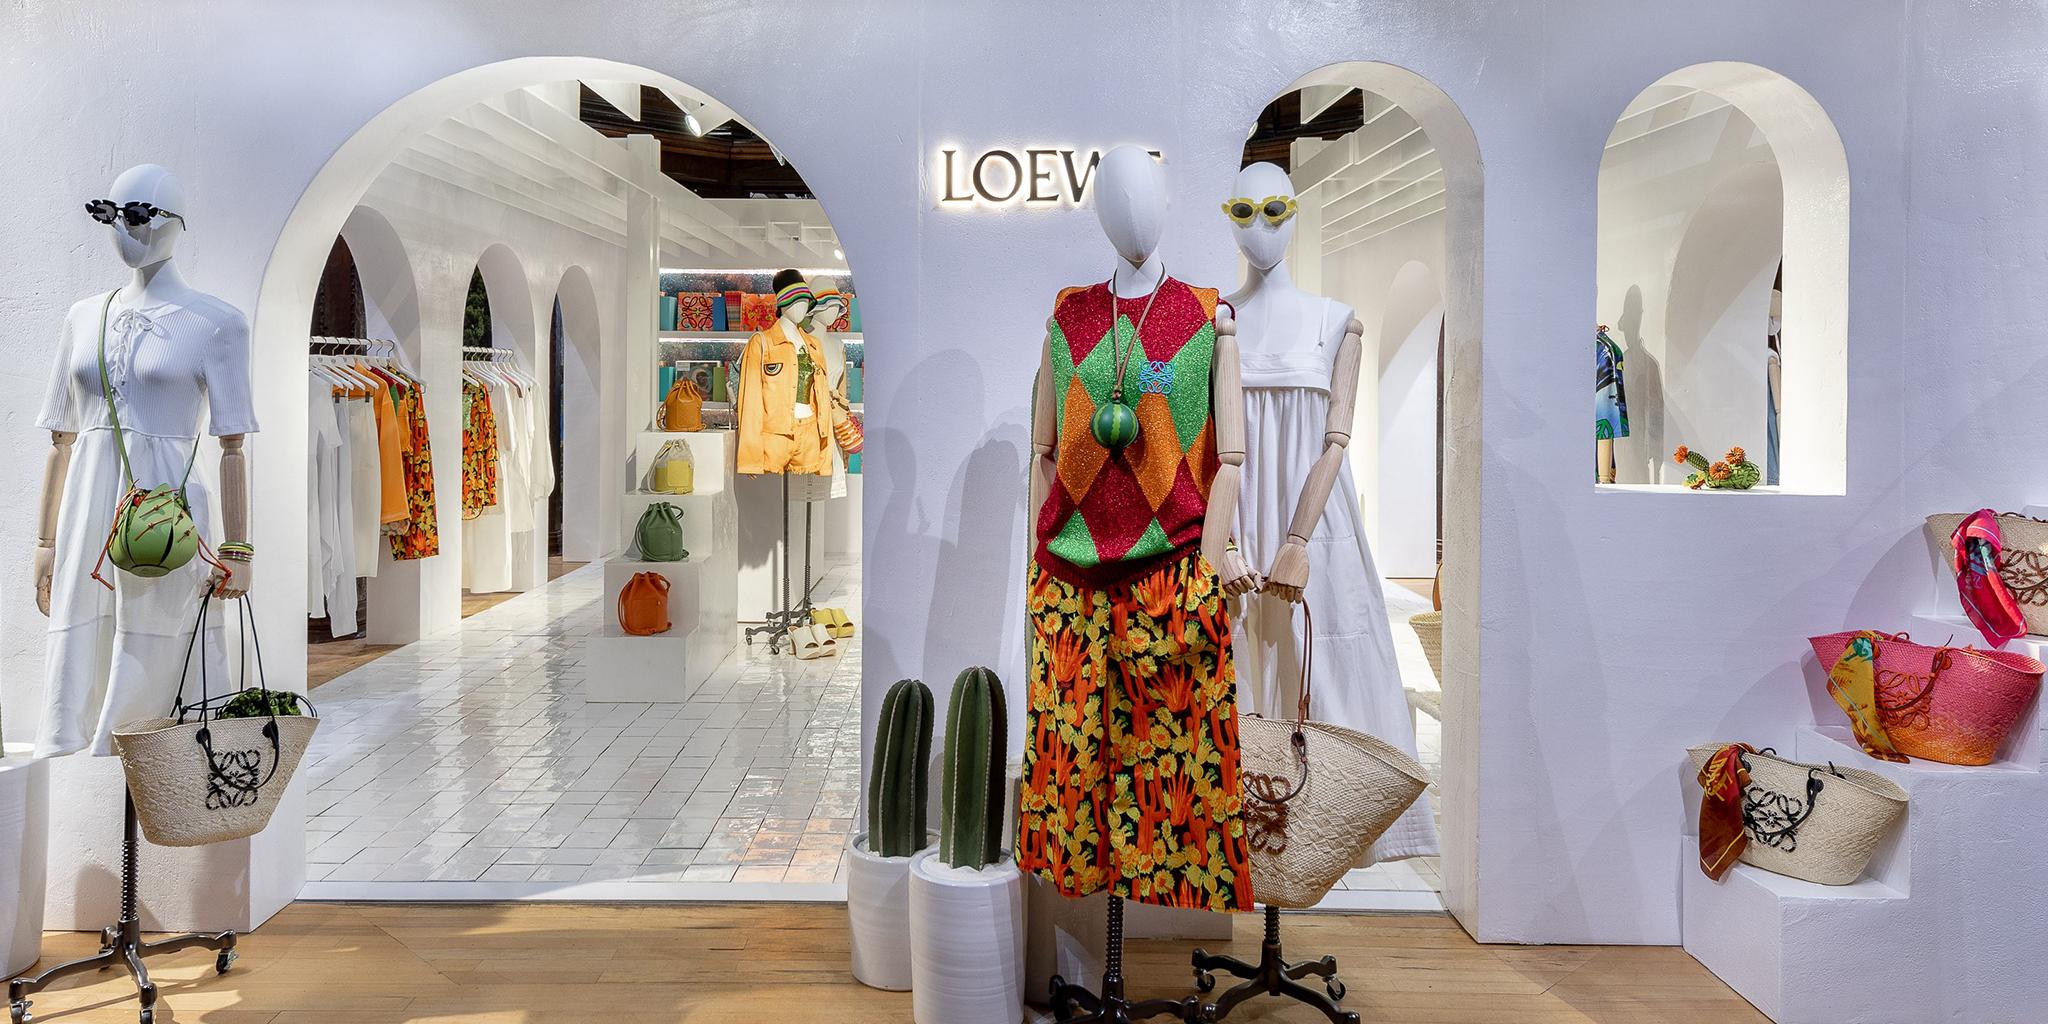 Get to Know: Loewe - Meet the trending brand I Shop authenic Loewe